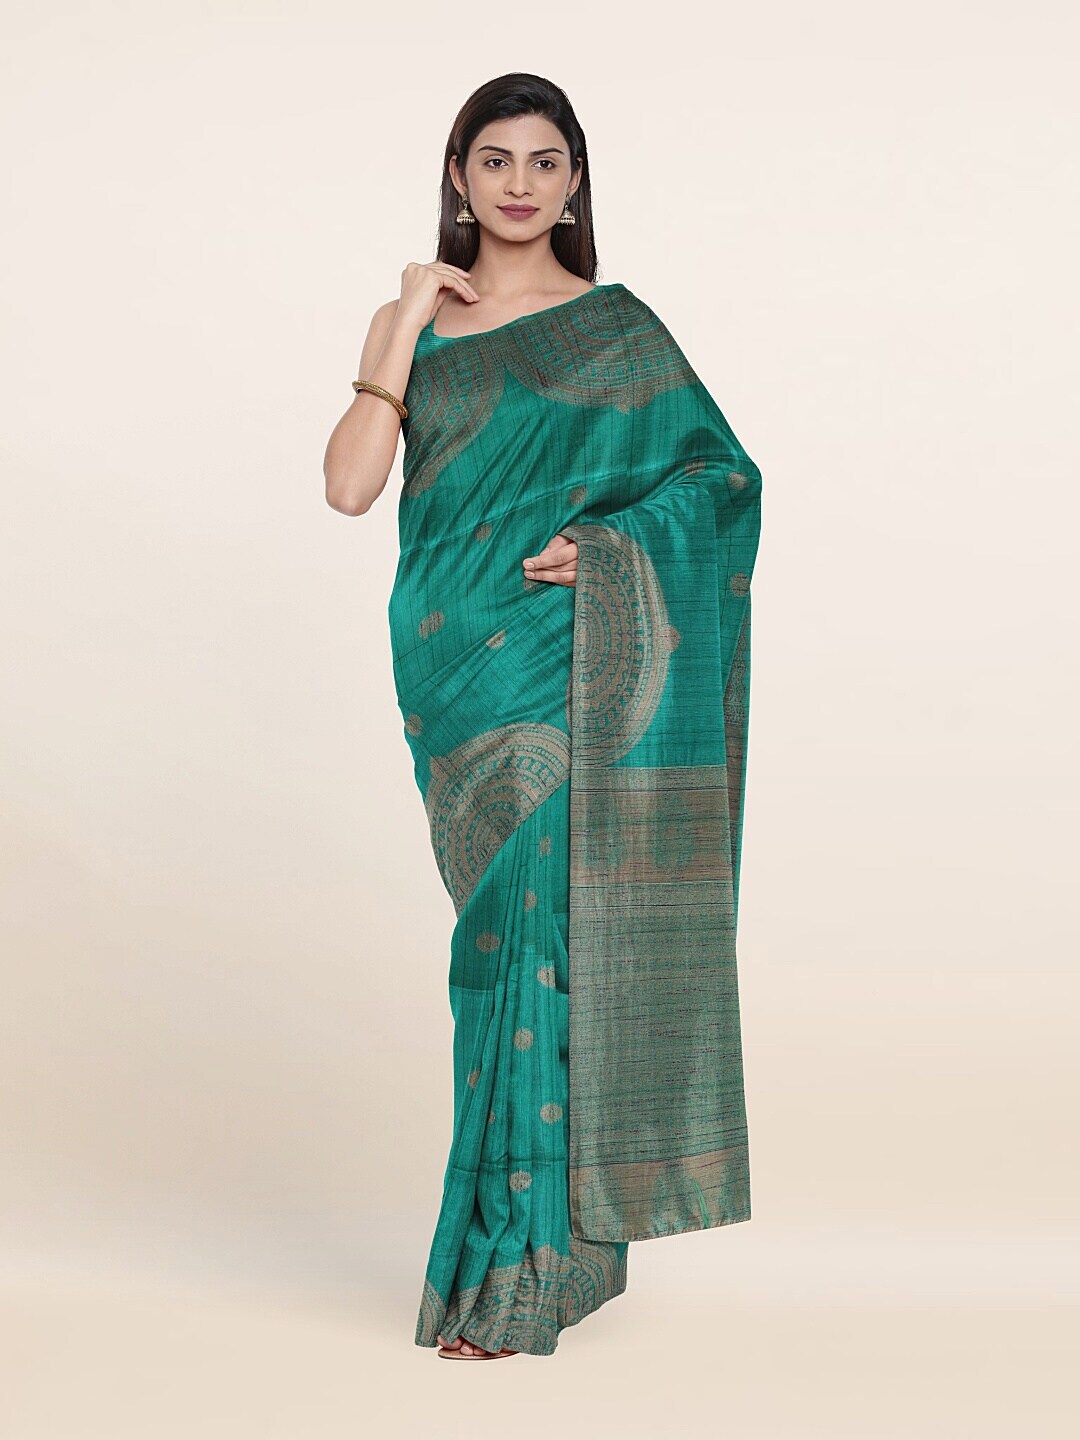 Pothys Green Ethnic Motifs Art Silk Saree Price in India